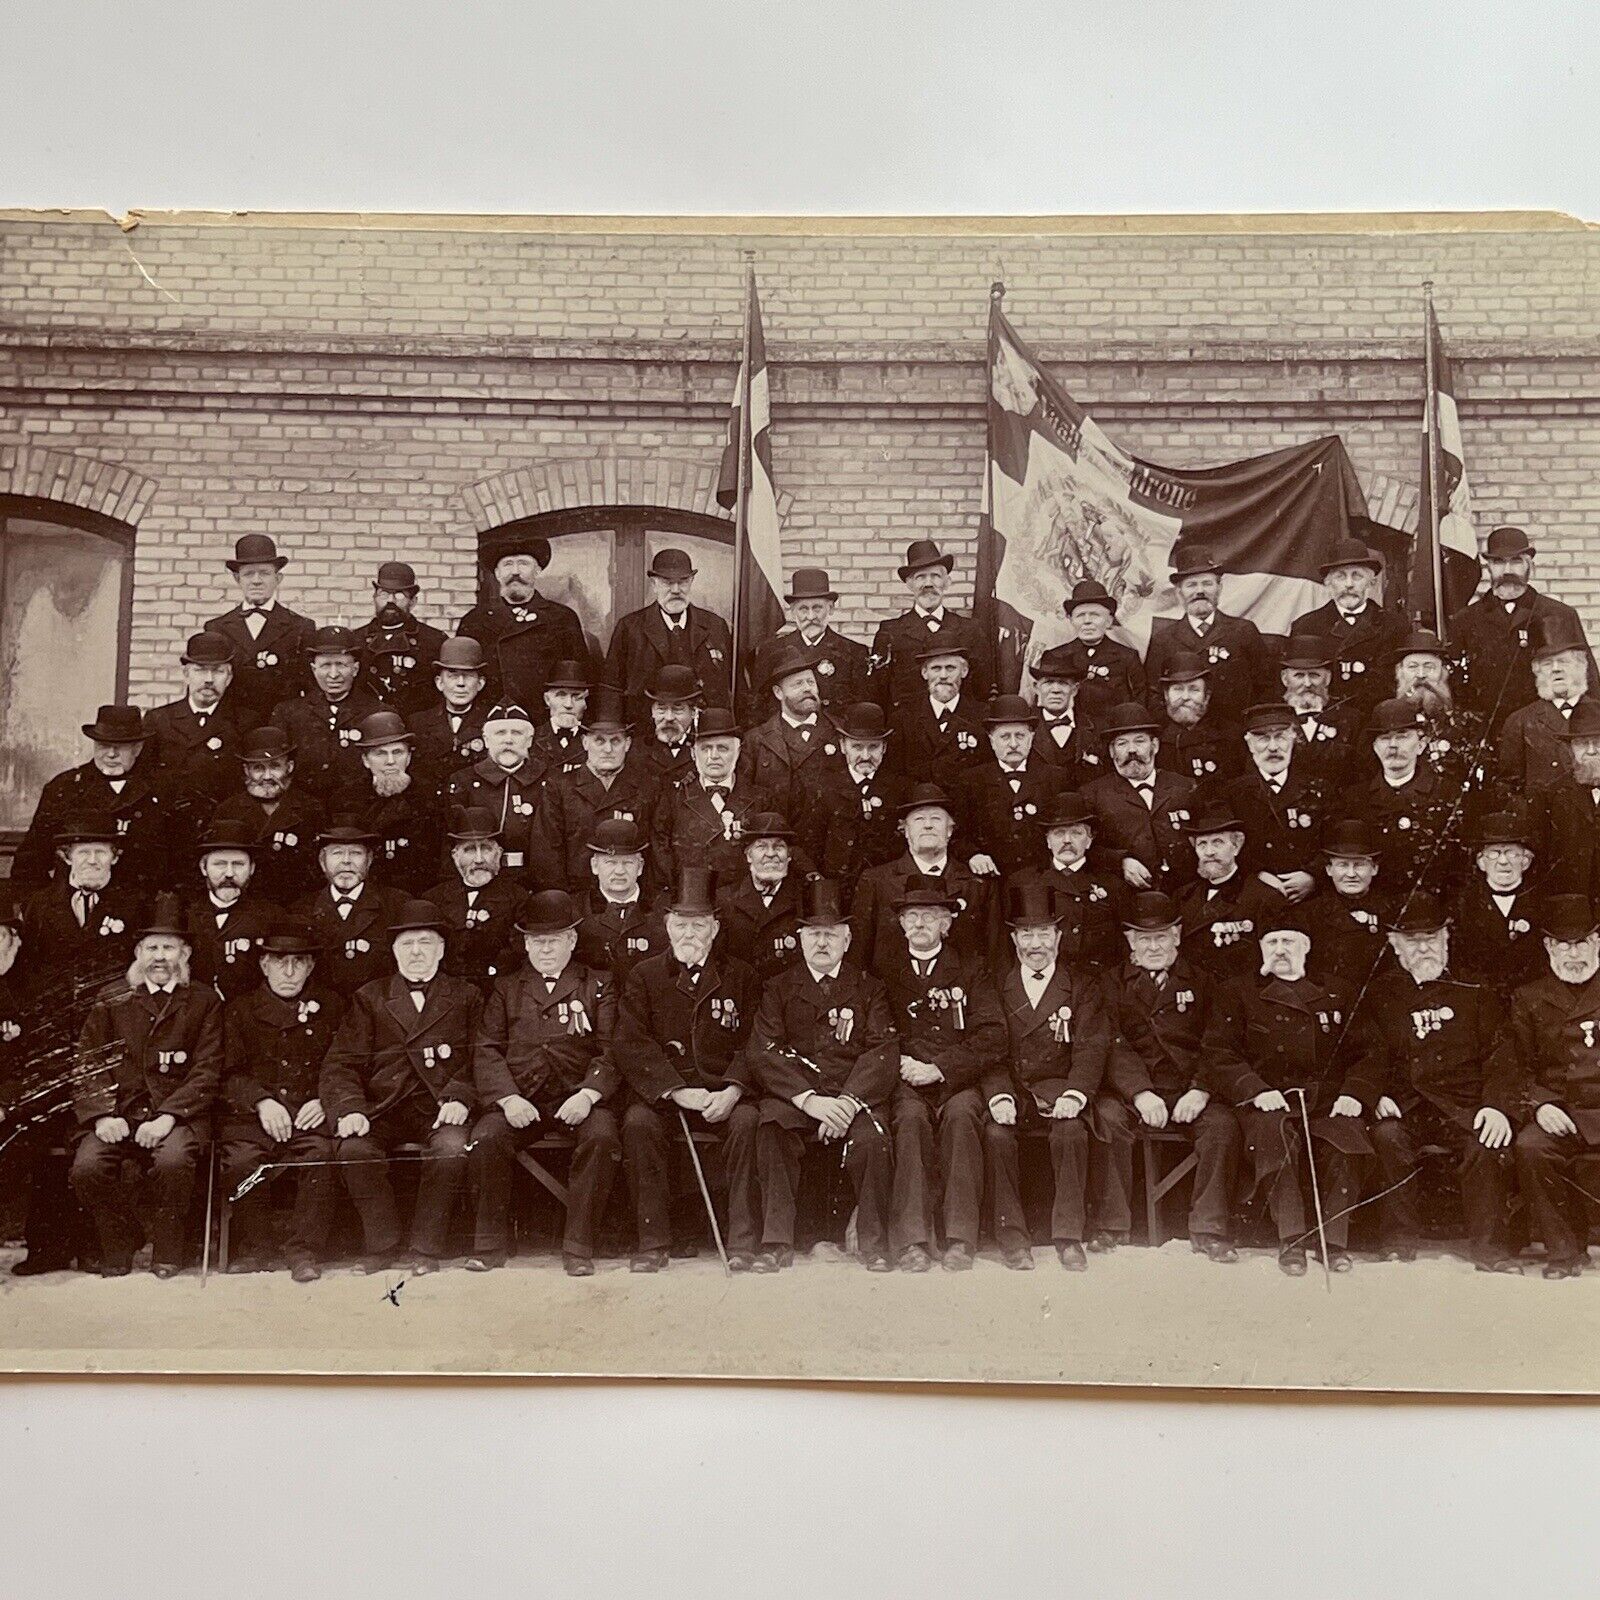 Antique Cabinet Card Group Photograph Veteran Military Men Reunion Top Hats